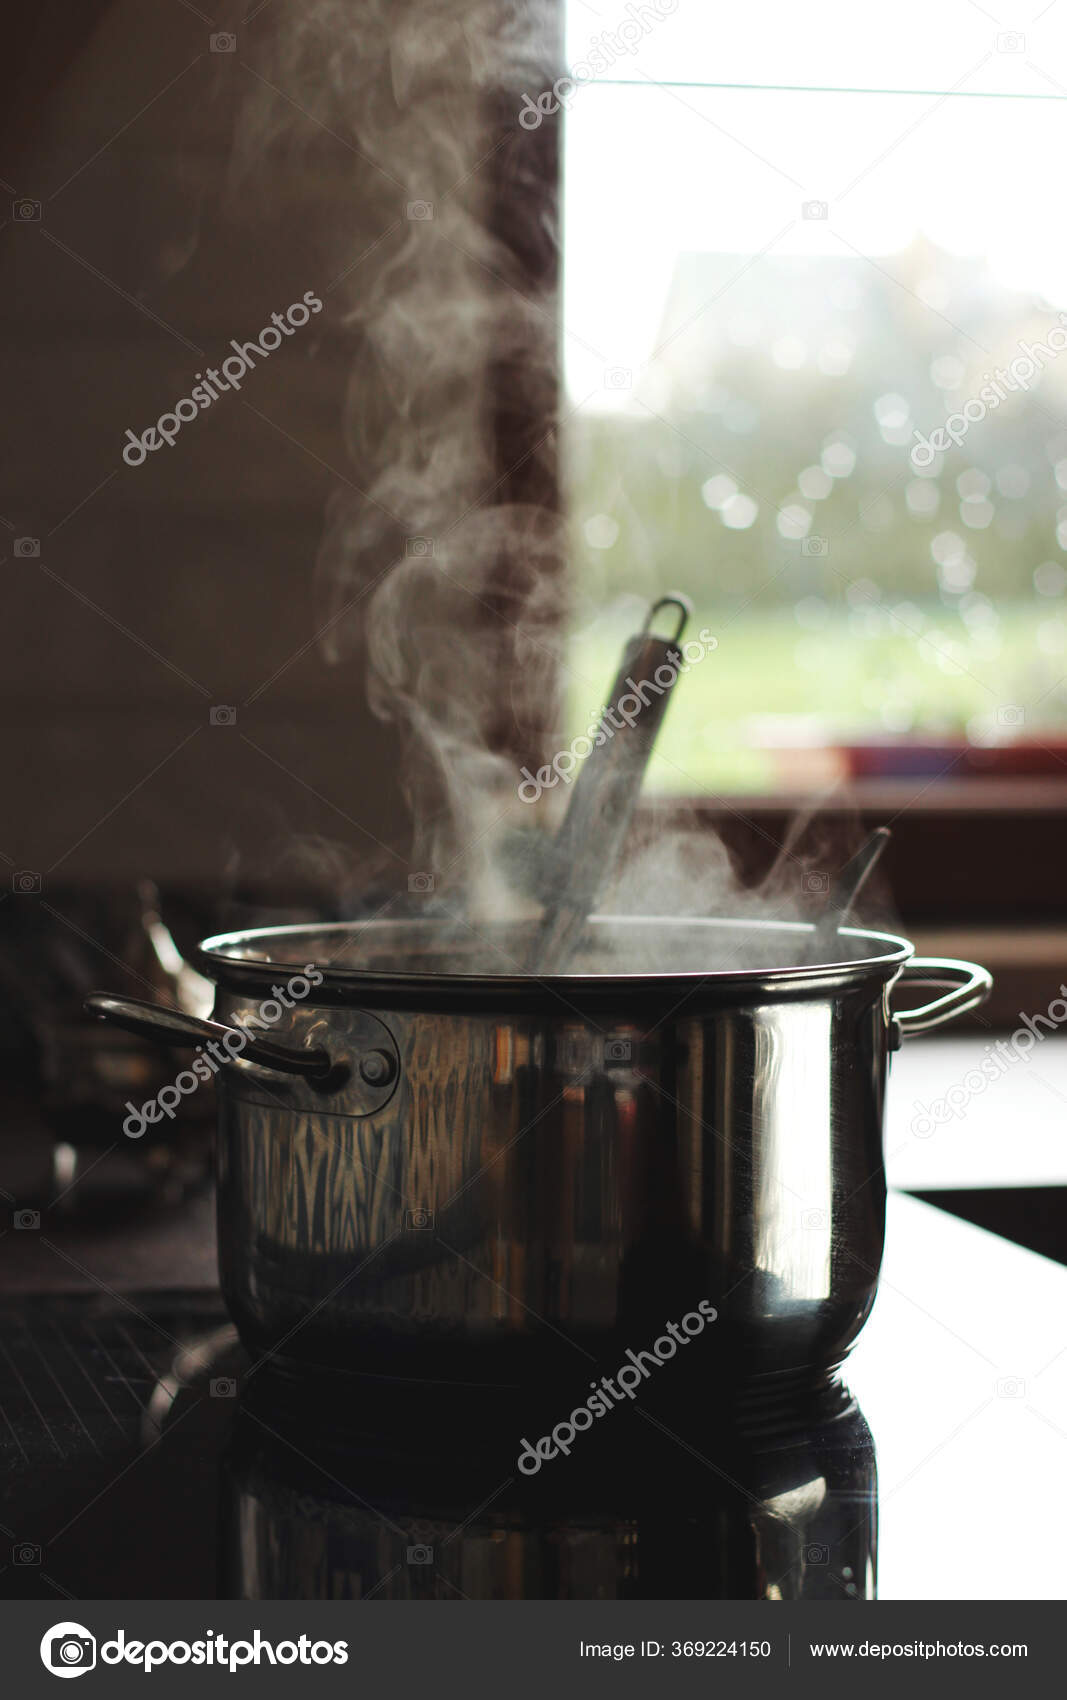 https://st3.depositphotos.com/35137694/36922/i/1600/depositphotos_369224150-stock-photo-pot-steam-kitchen-aroma.jpg